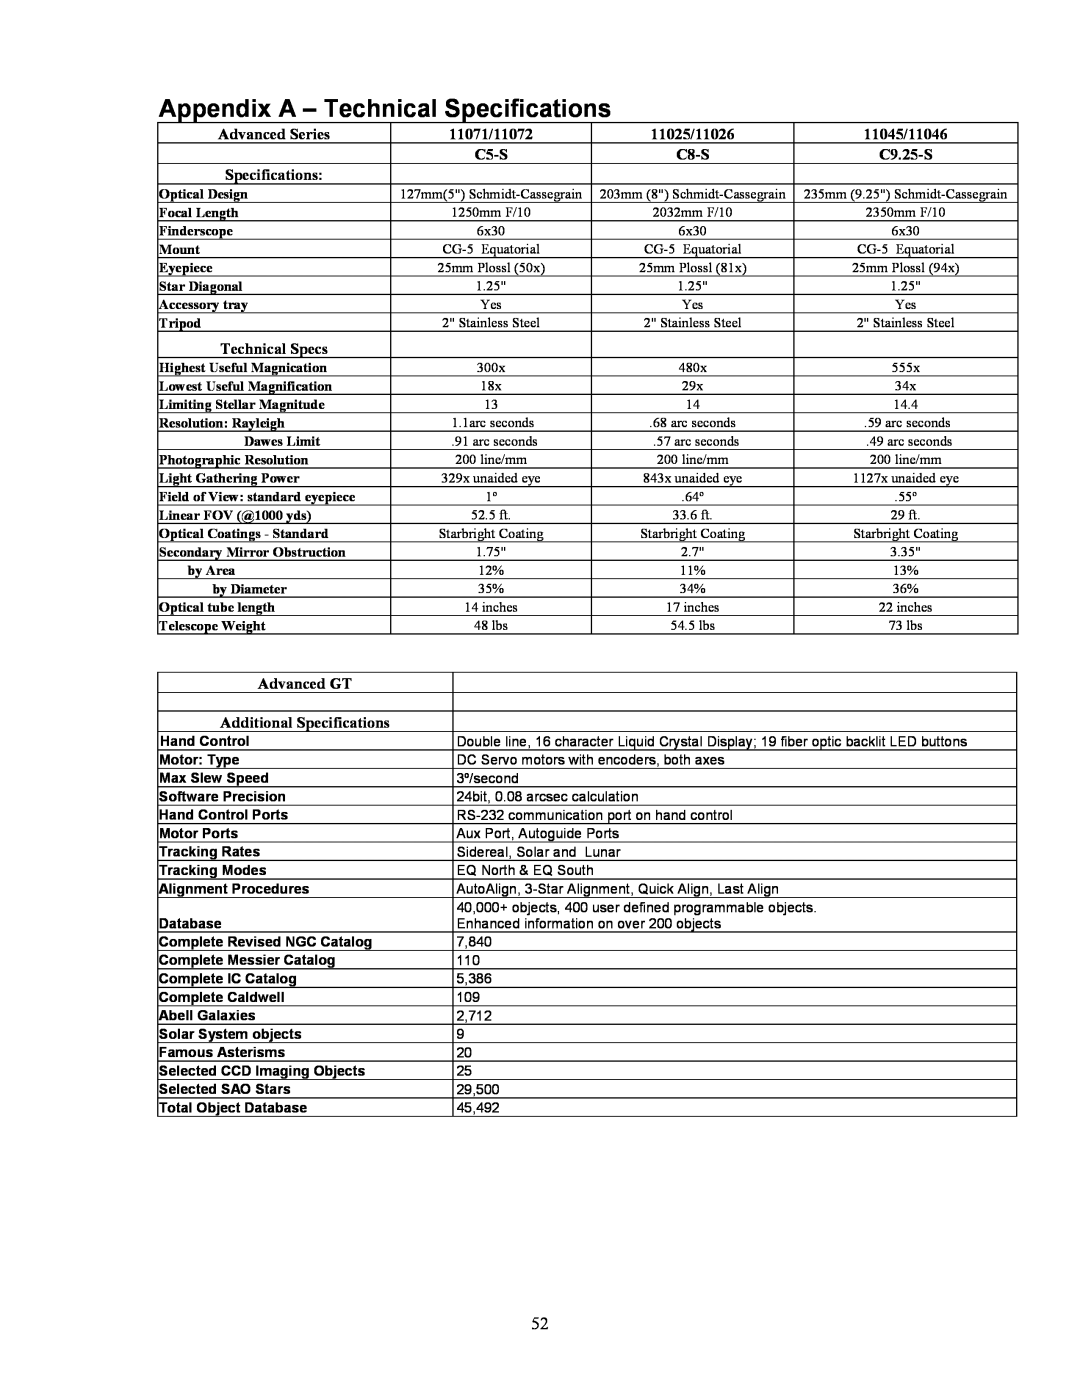 Celestron C9-S Appendix A - Technical Specifications, Advanced Series, 11071/11072, 11025/11026, 11045/11046, Advanced GT 